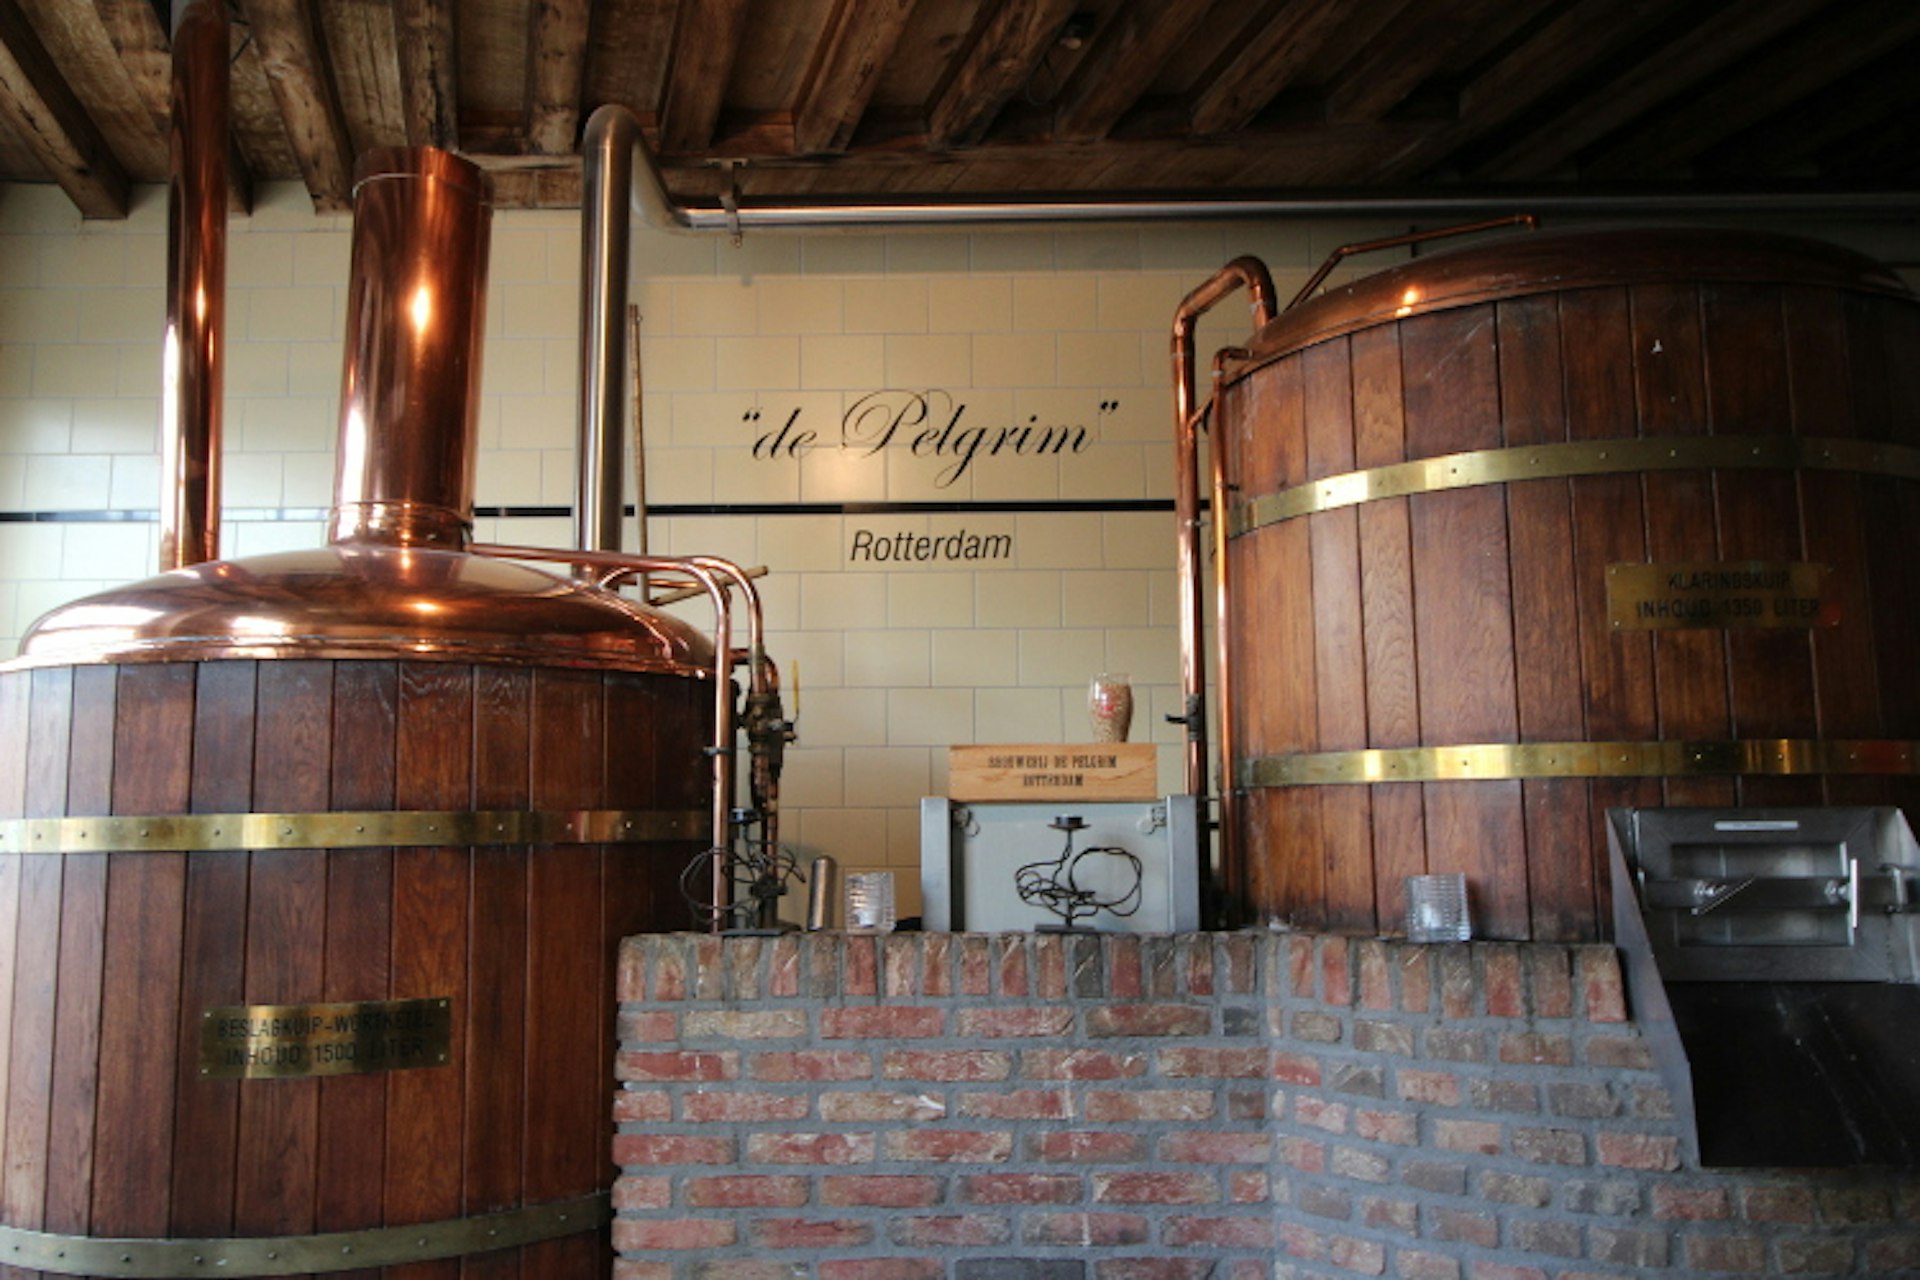 Taste the seasonal brew at Stadsbrouwerij De Pelgrim. Image by Catherine Le Nevez/Lonely Planet